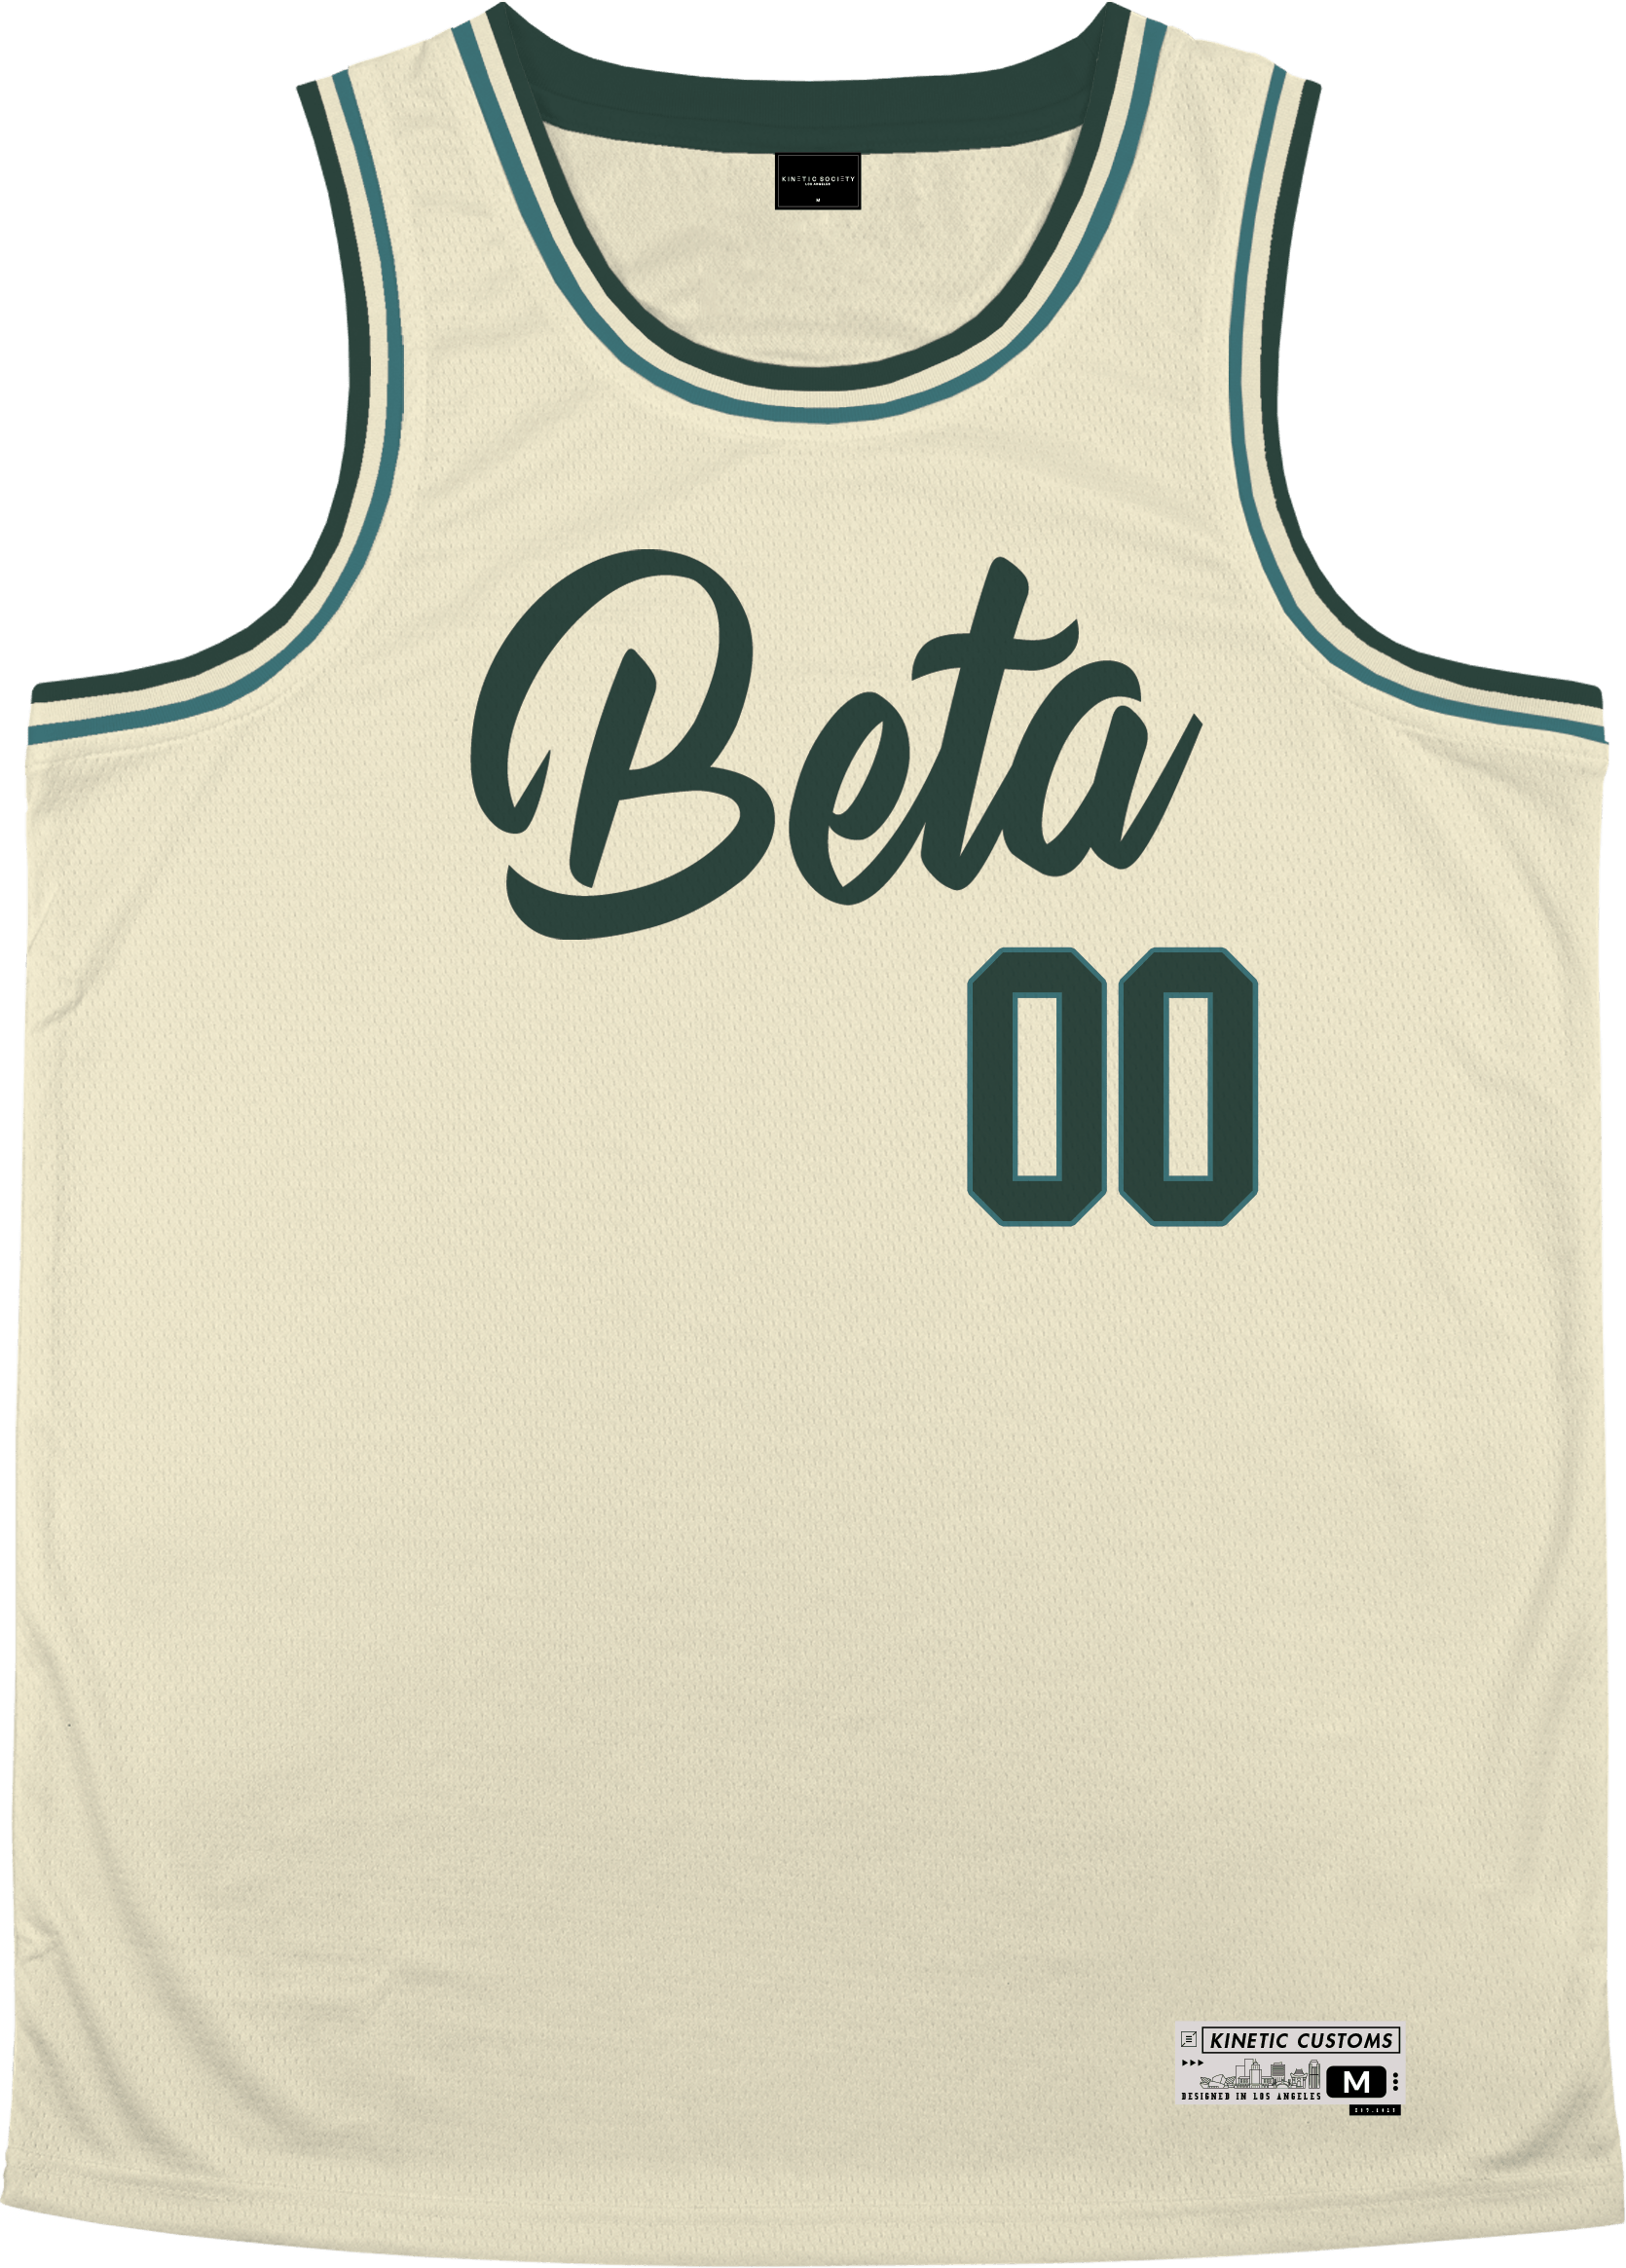 Beta Theta Pi - Buttercream Basketball Jersey Premium Basketball Kinetic Society LLC 